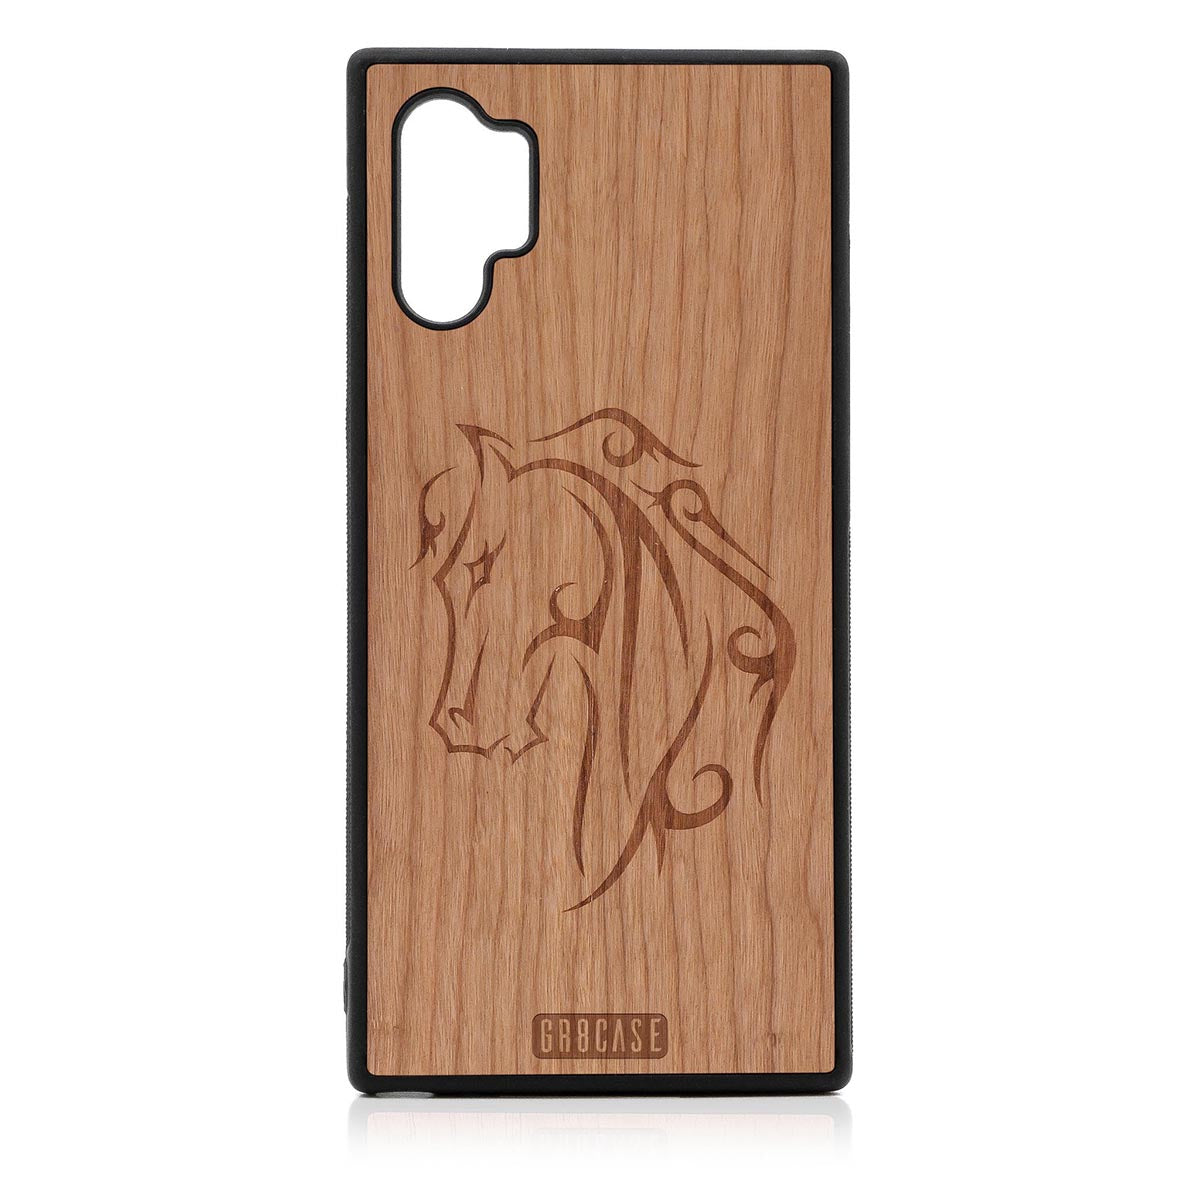 Horse Tattoo Design Wood Case Samsung Galaxy Note 10 Plus by GR8CASE